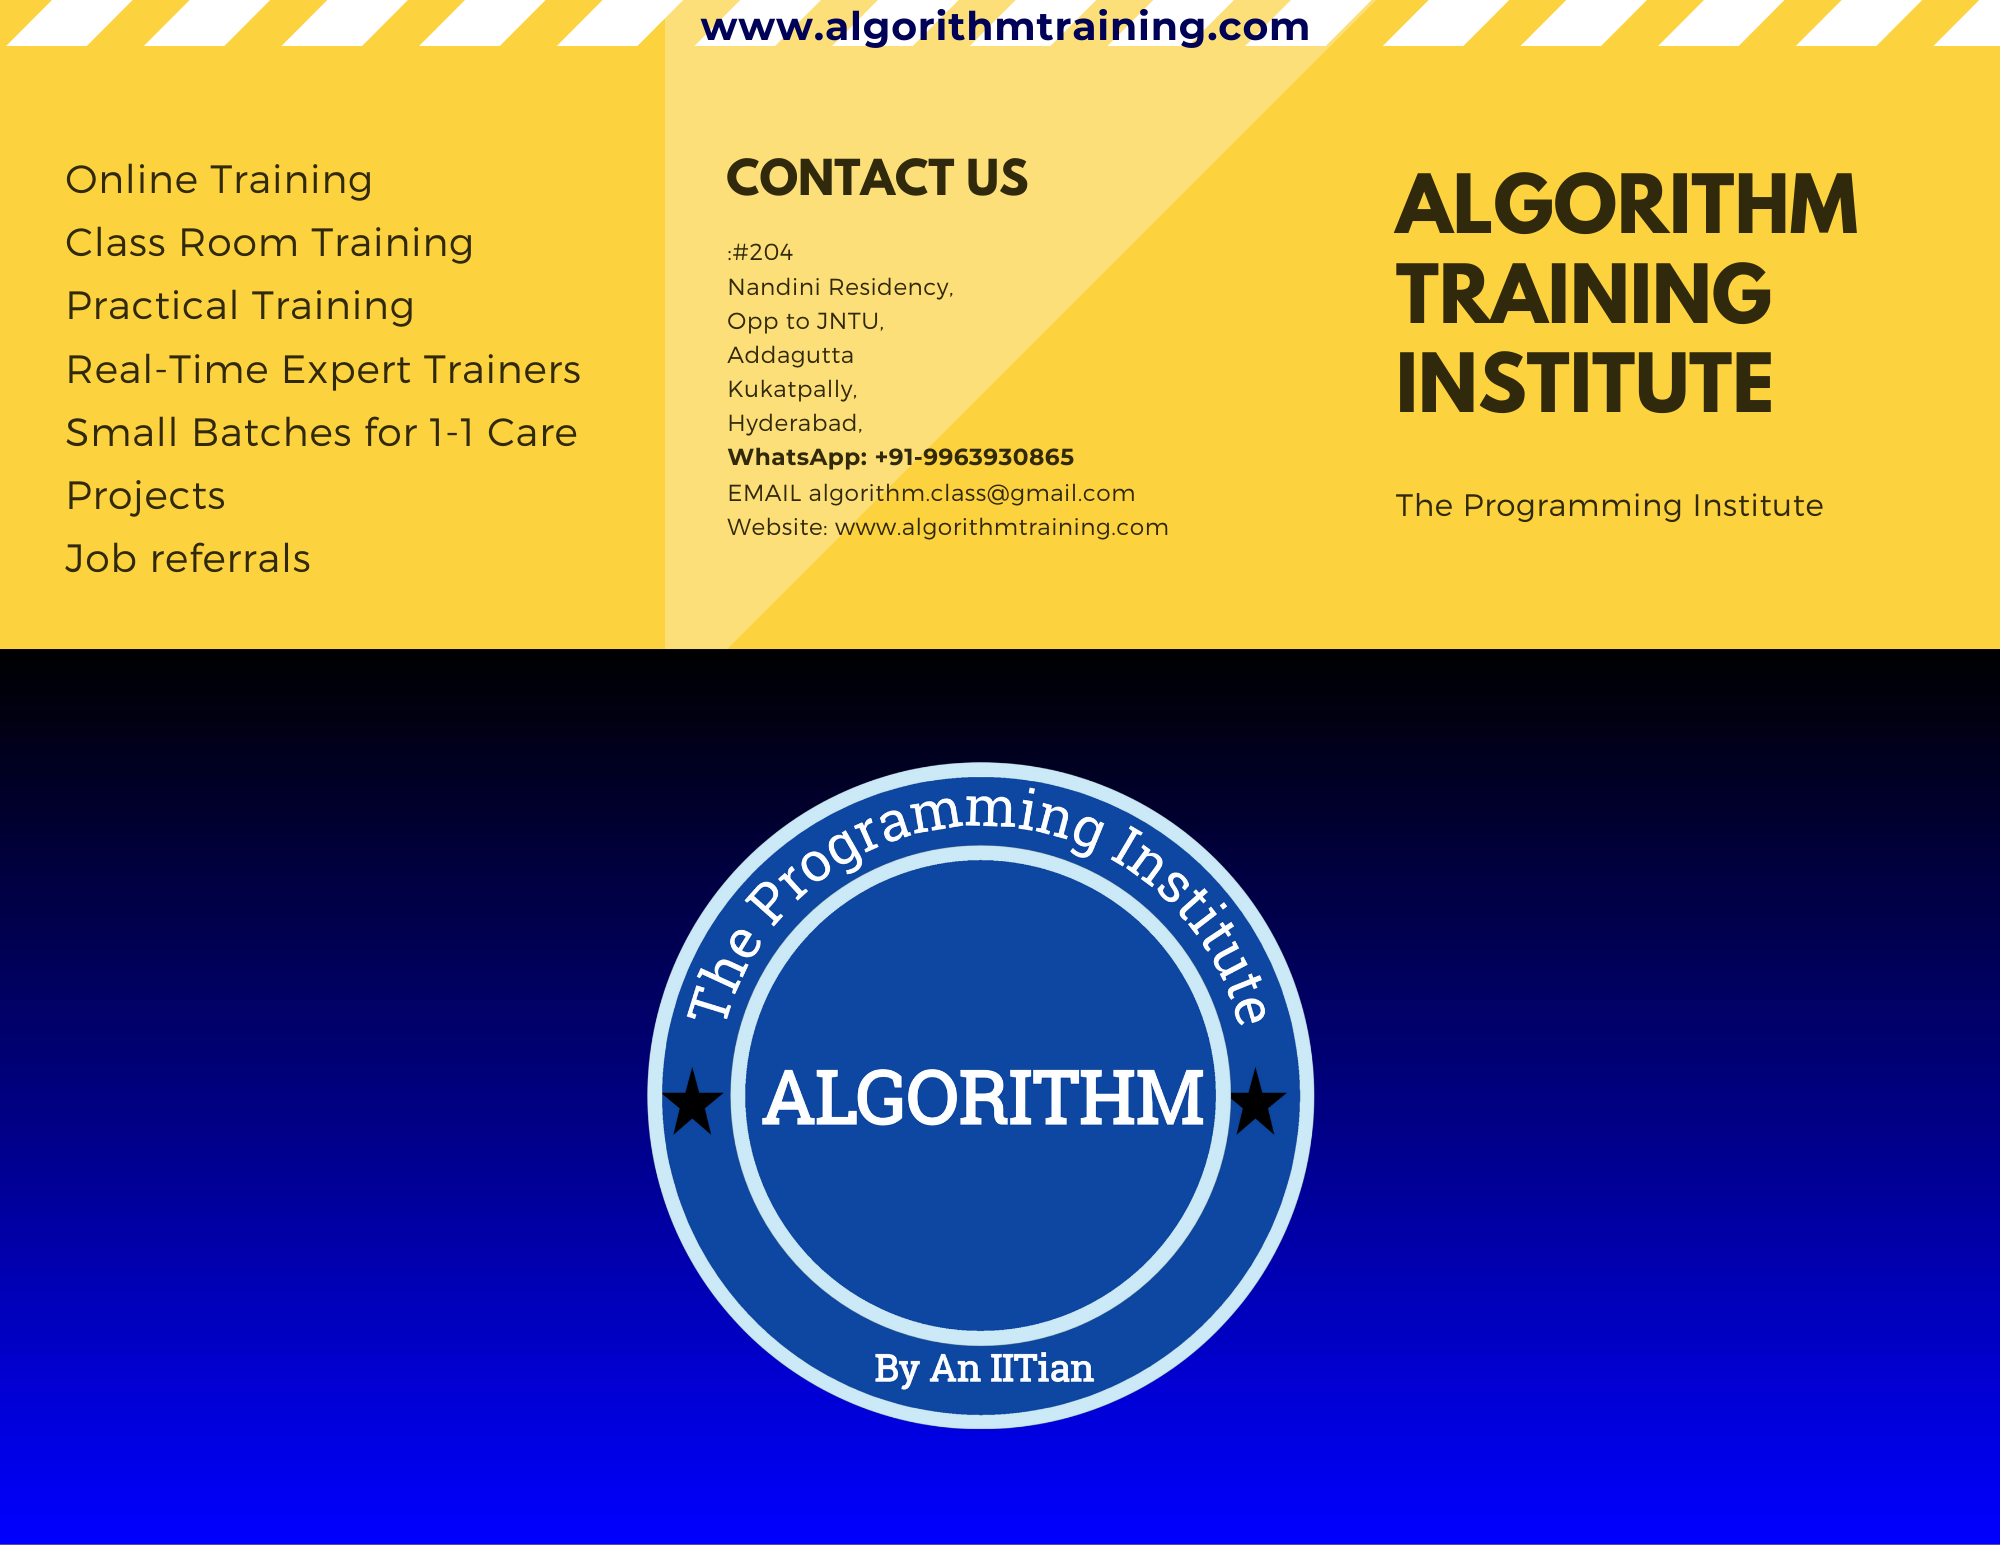 Learn C/C++ online Training from India - Ecorptrainings - Medium